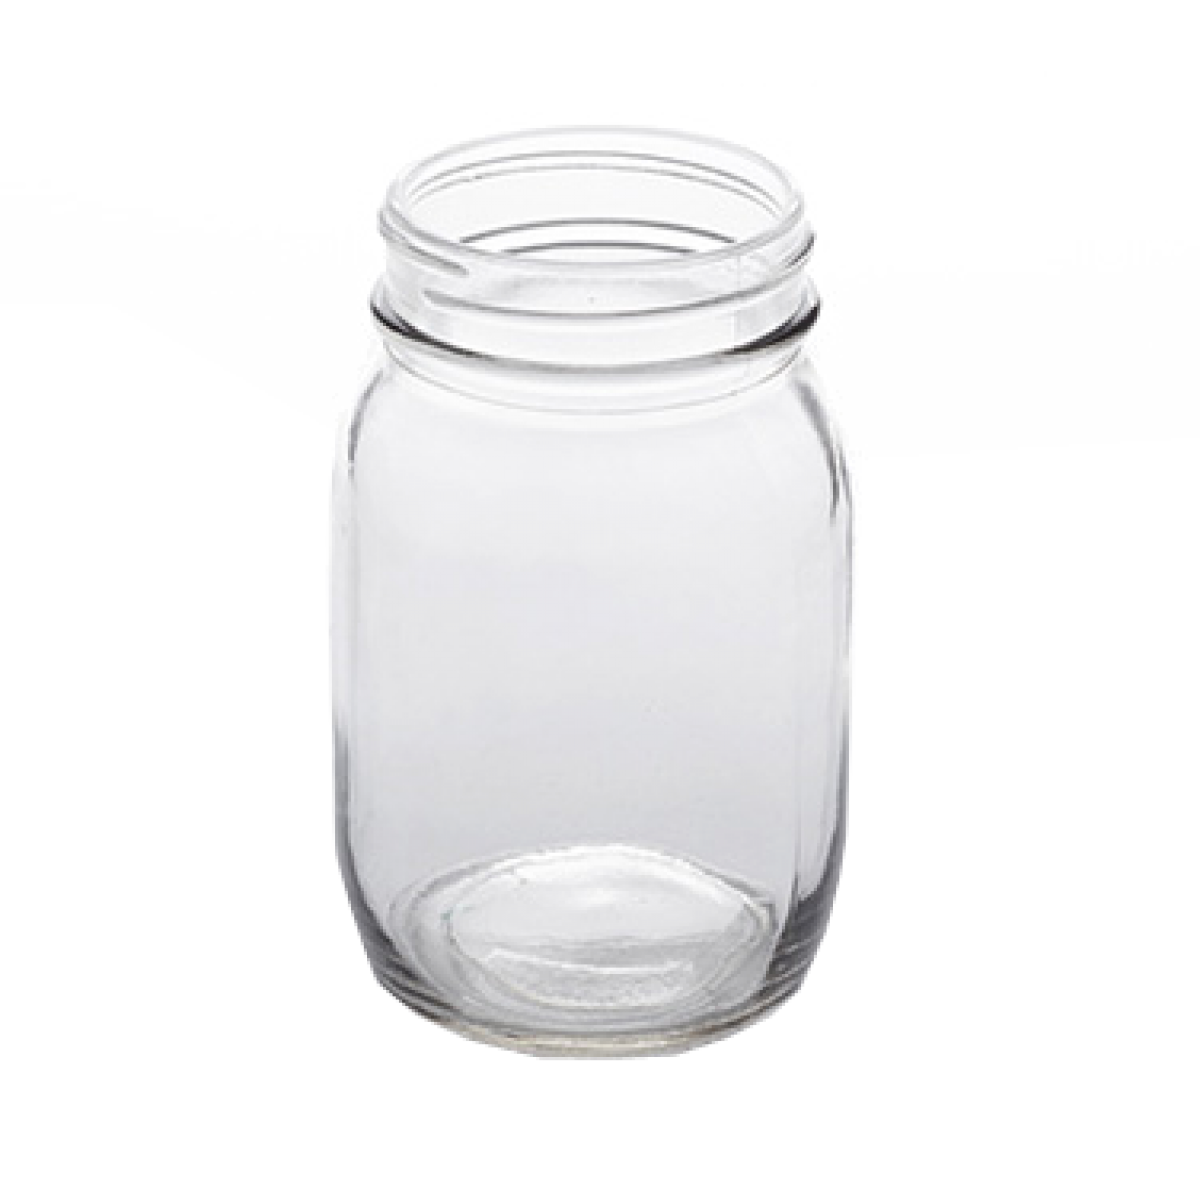 Jar Container PNG Transparent Image